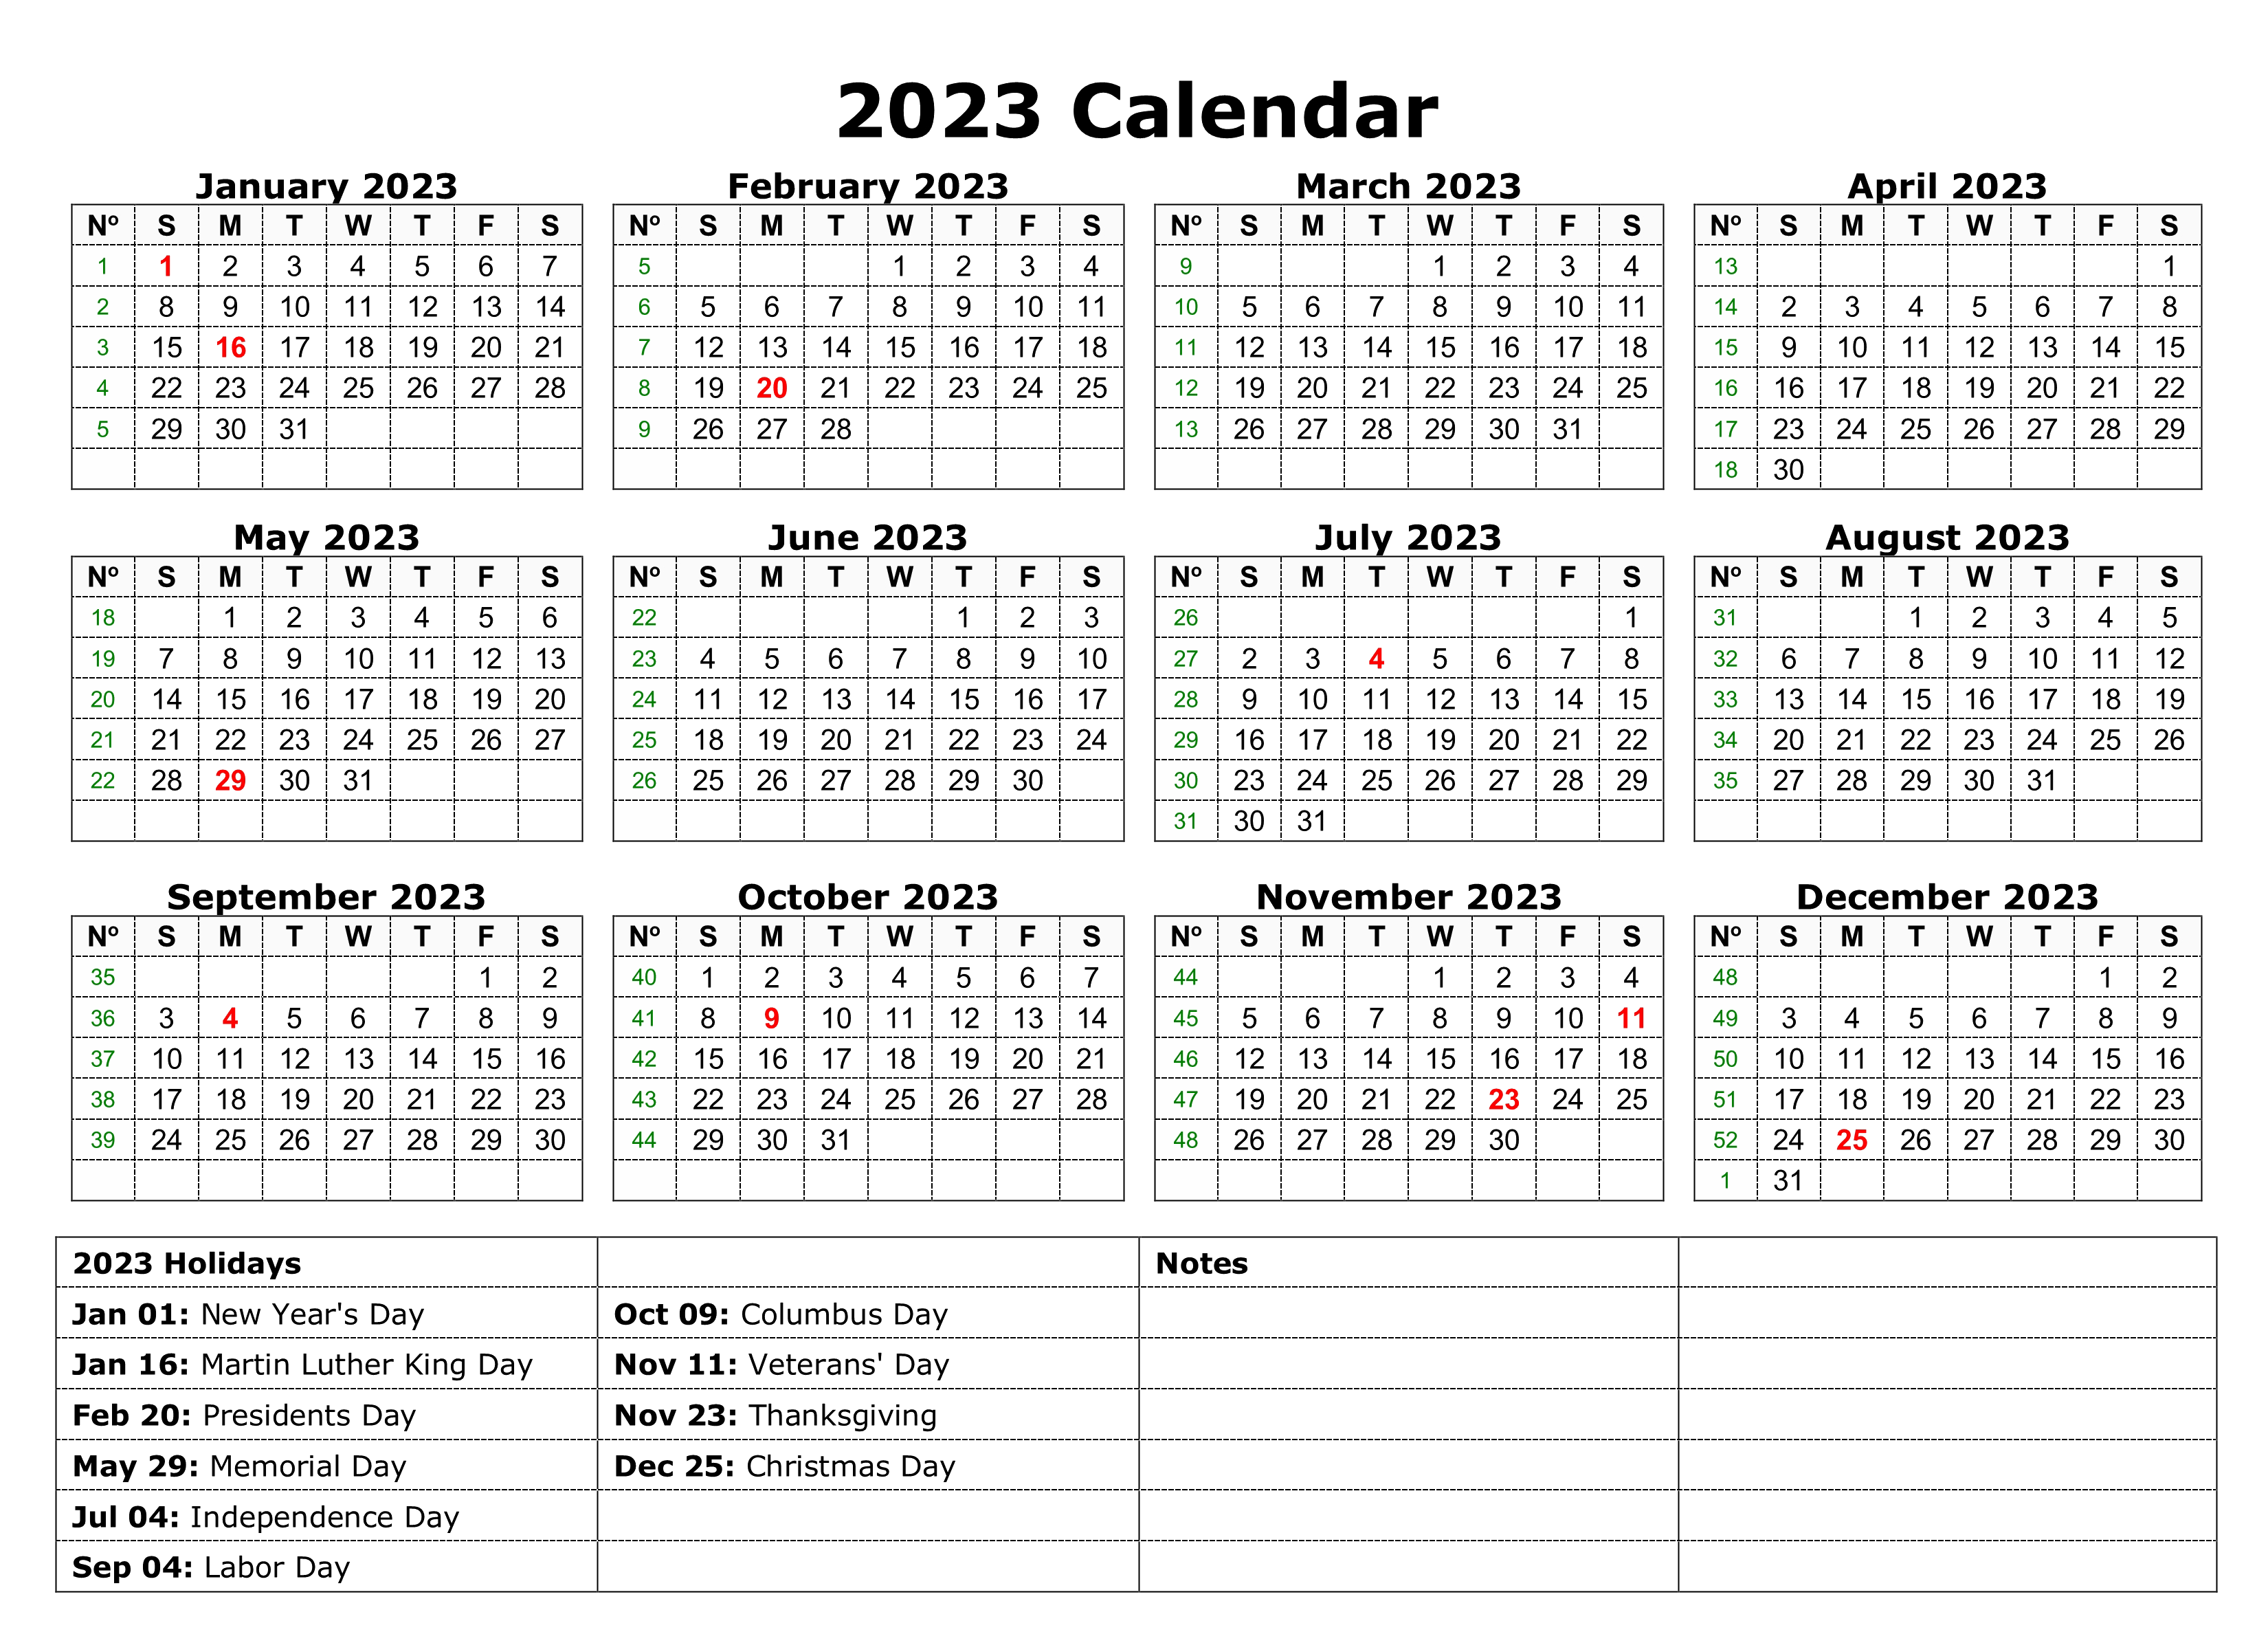 Calendar 2023 PNG HQ Photo